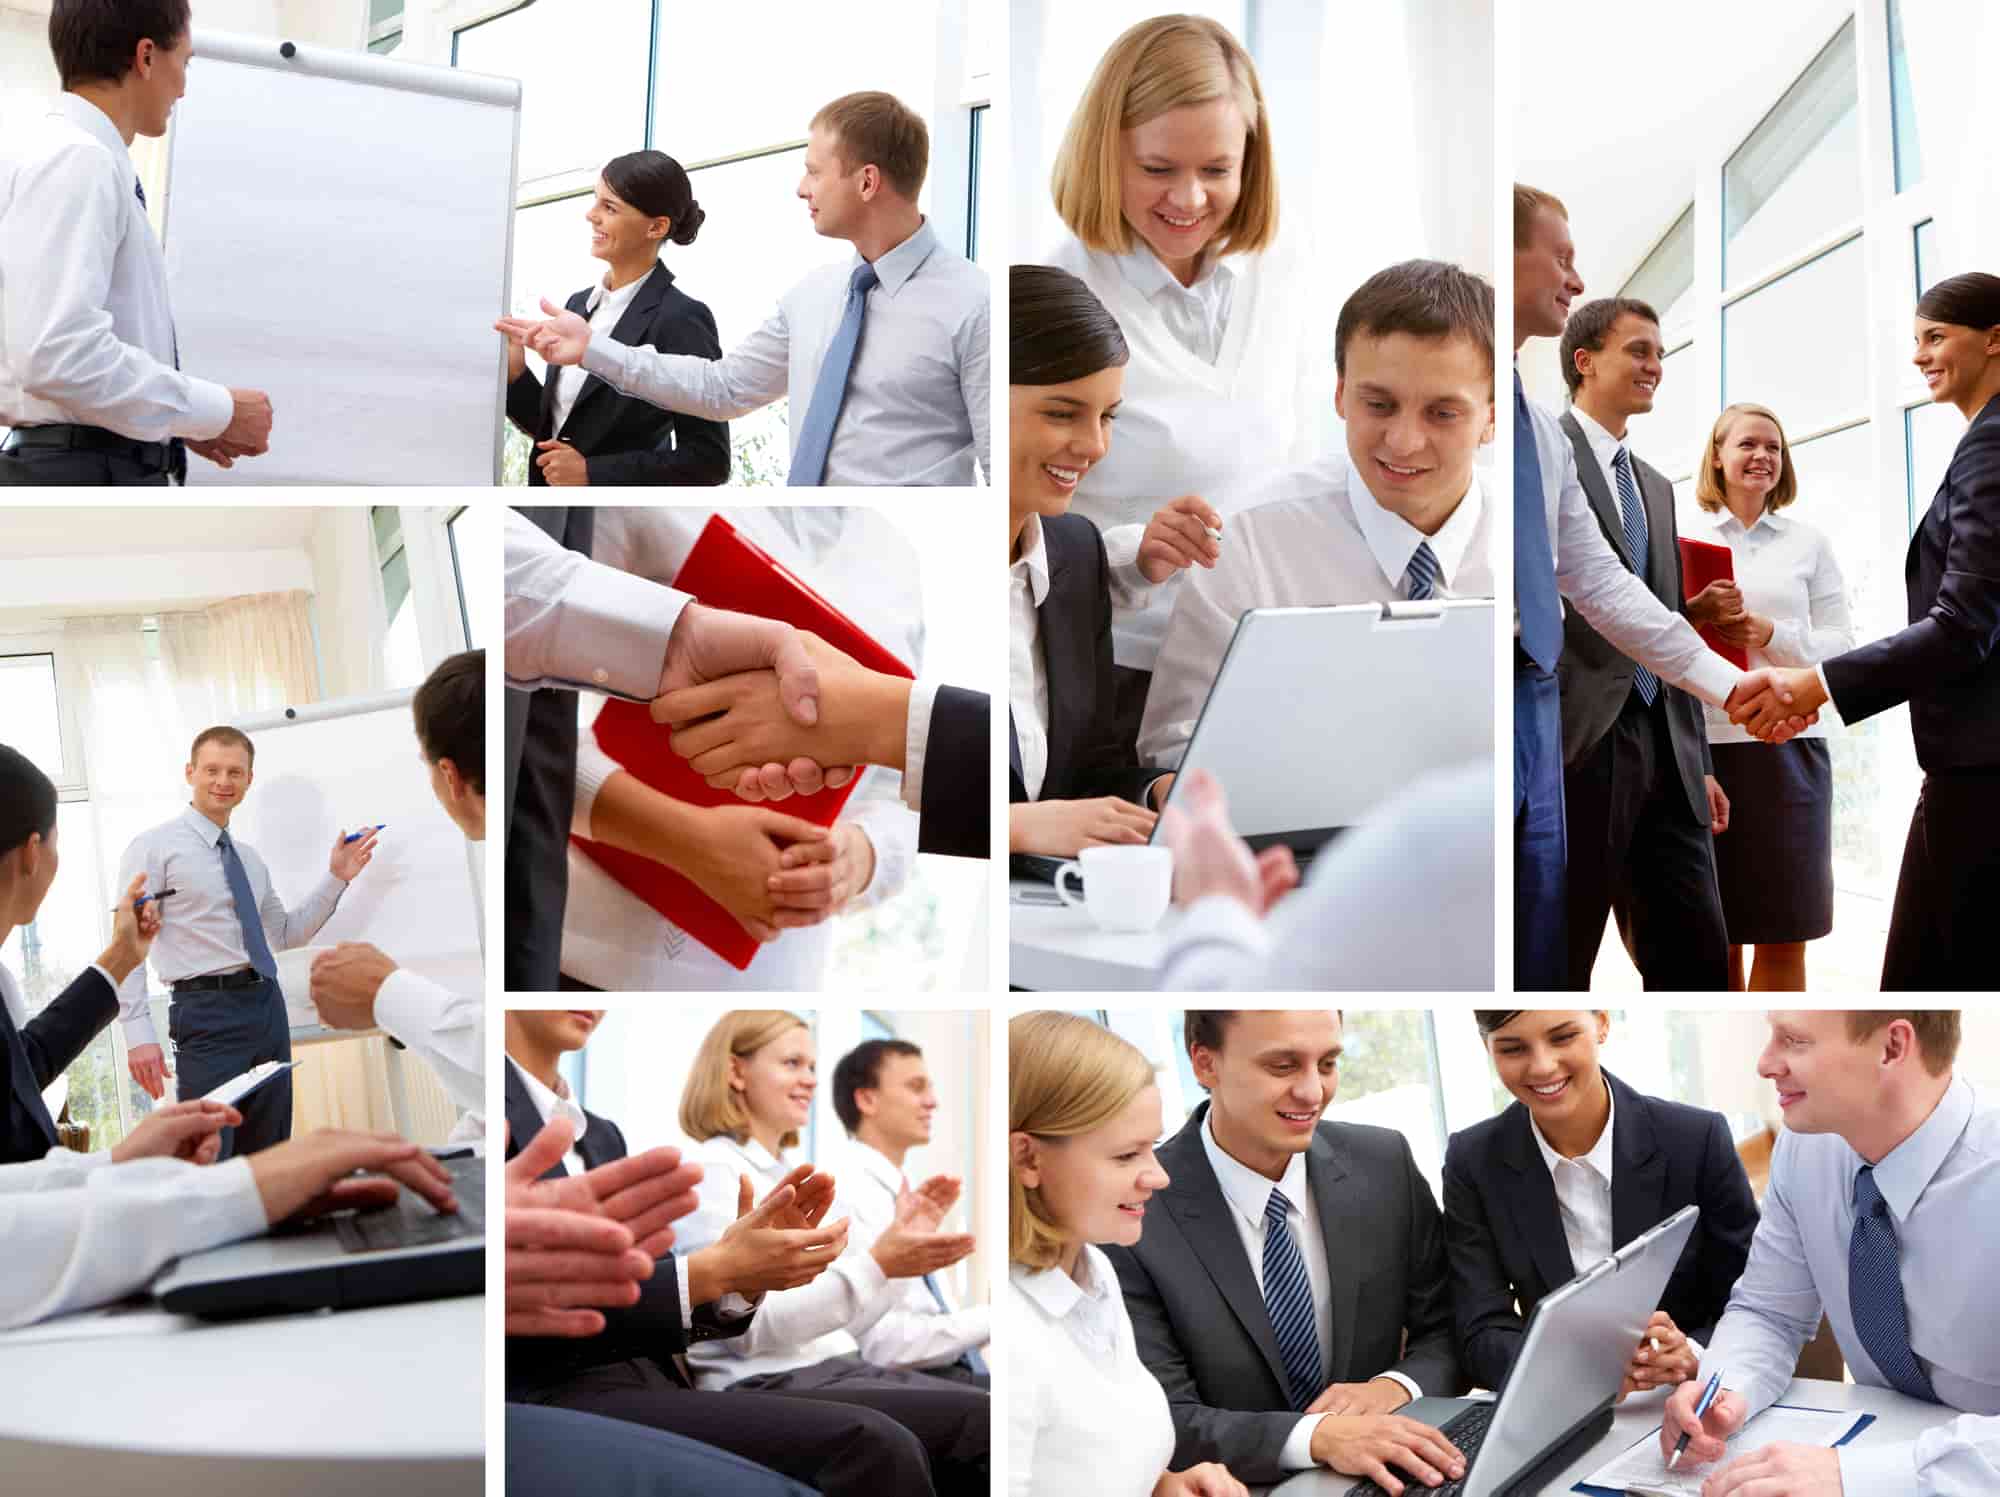 Professional and Management Development Training business in Dubai